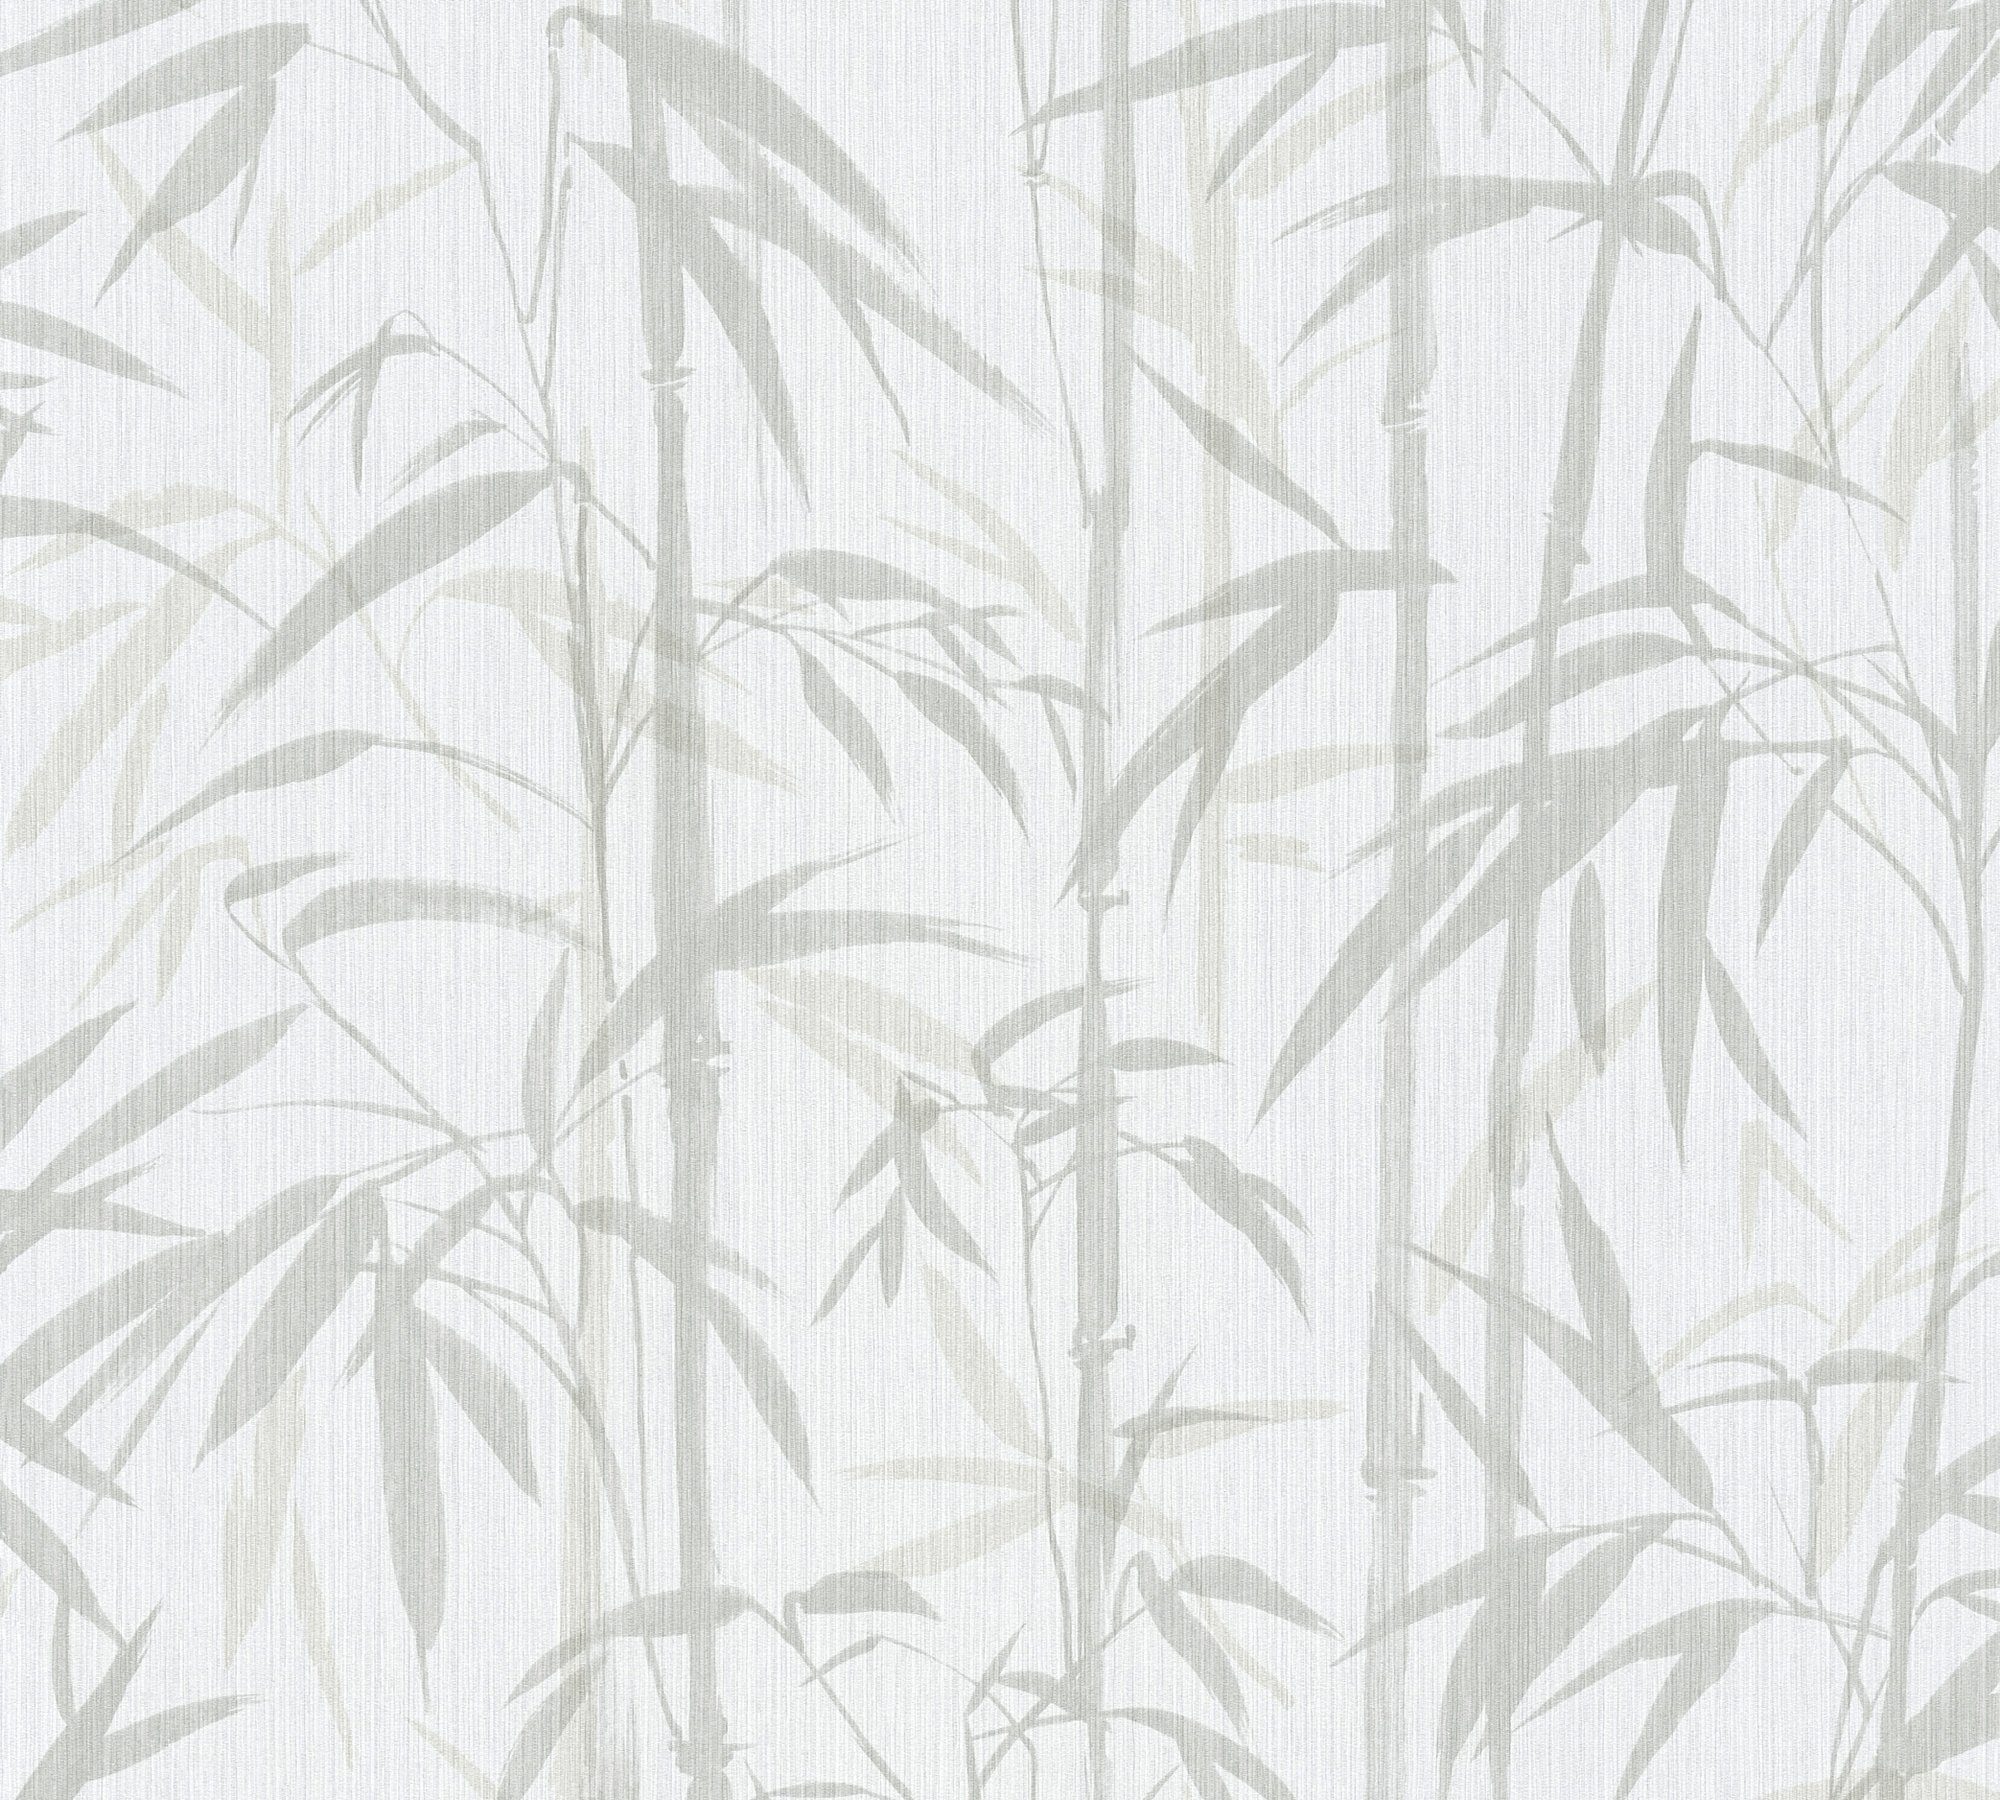 Tapete LIVING Designertapete Change Création botanisch, good, Bold creme/beige is Vliestapete Bambus floral, BY Bamboo, MICHALSKY A.S. tropisch, METROPOLIS